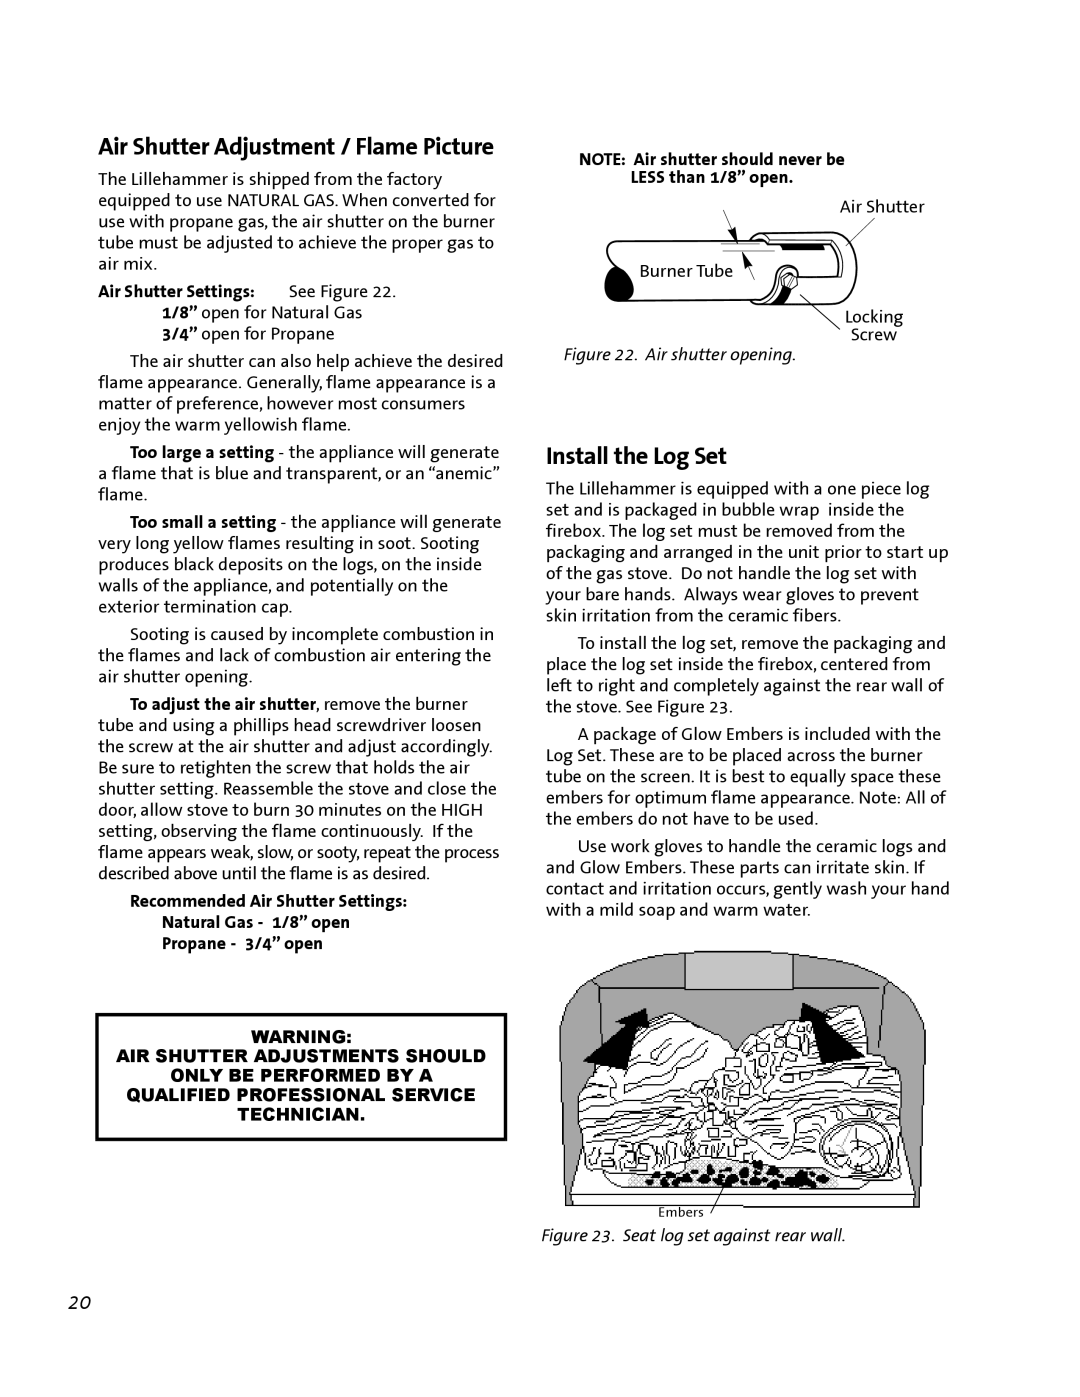 Jotul GF 200 DV manual Install the Log Set, Air Shutter Settings See Figure, Recommended Air Shutter Settings 